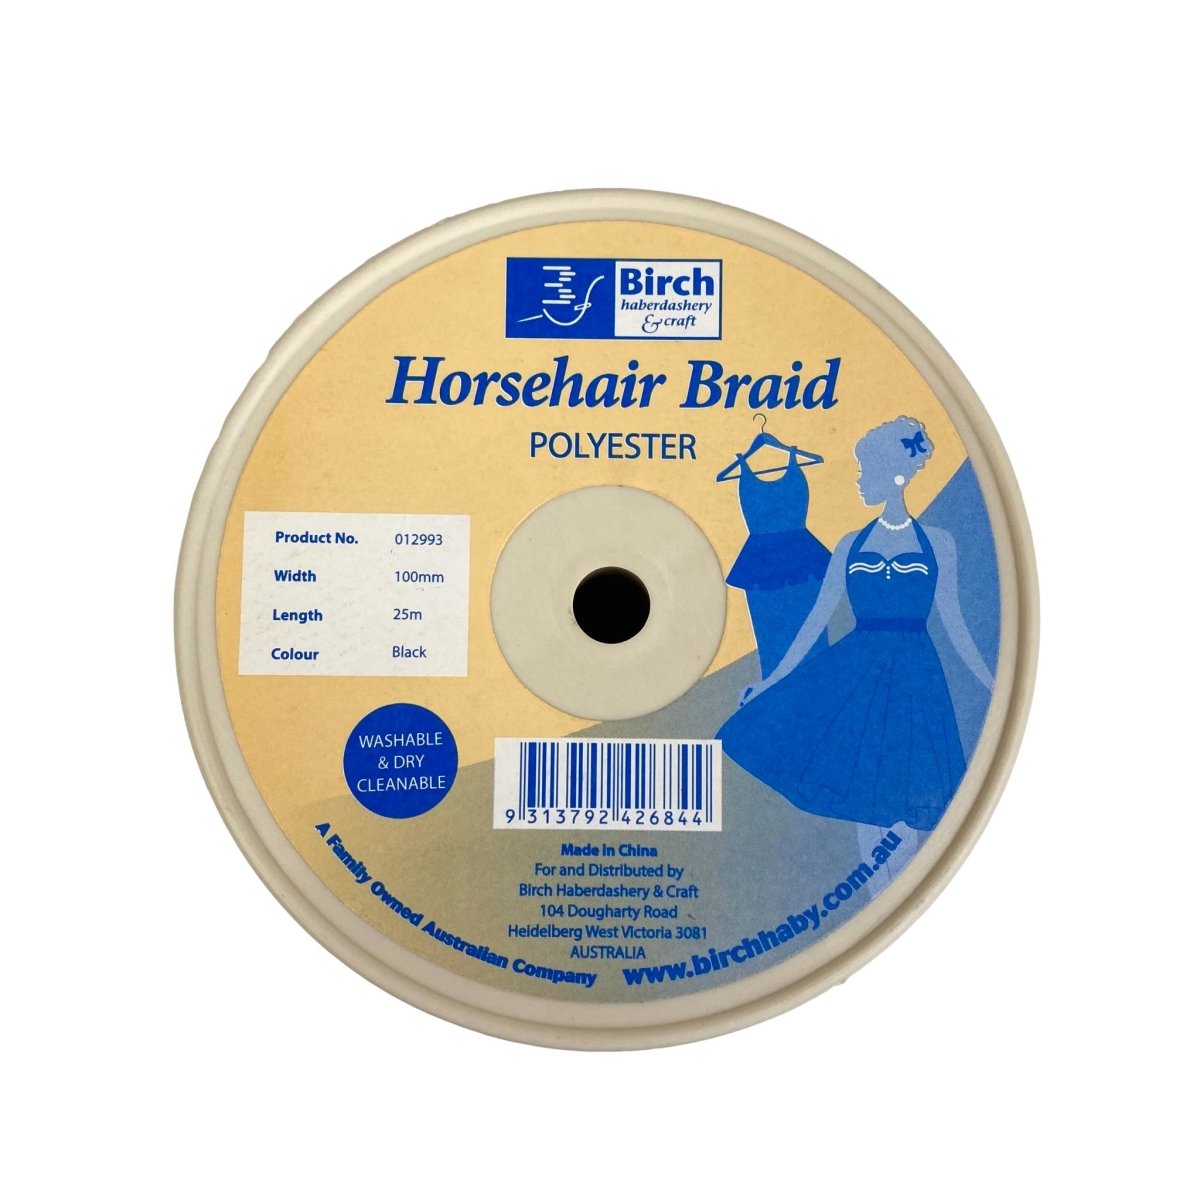 Horsehair Braid - Polyester - Black